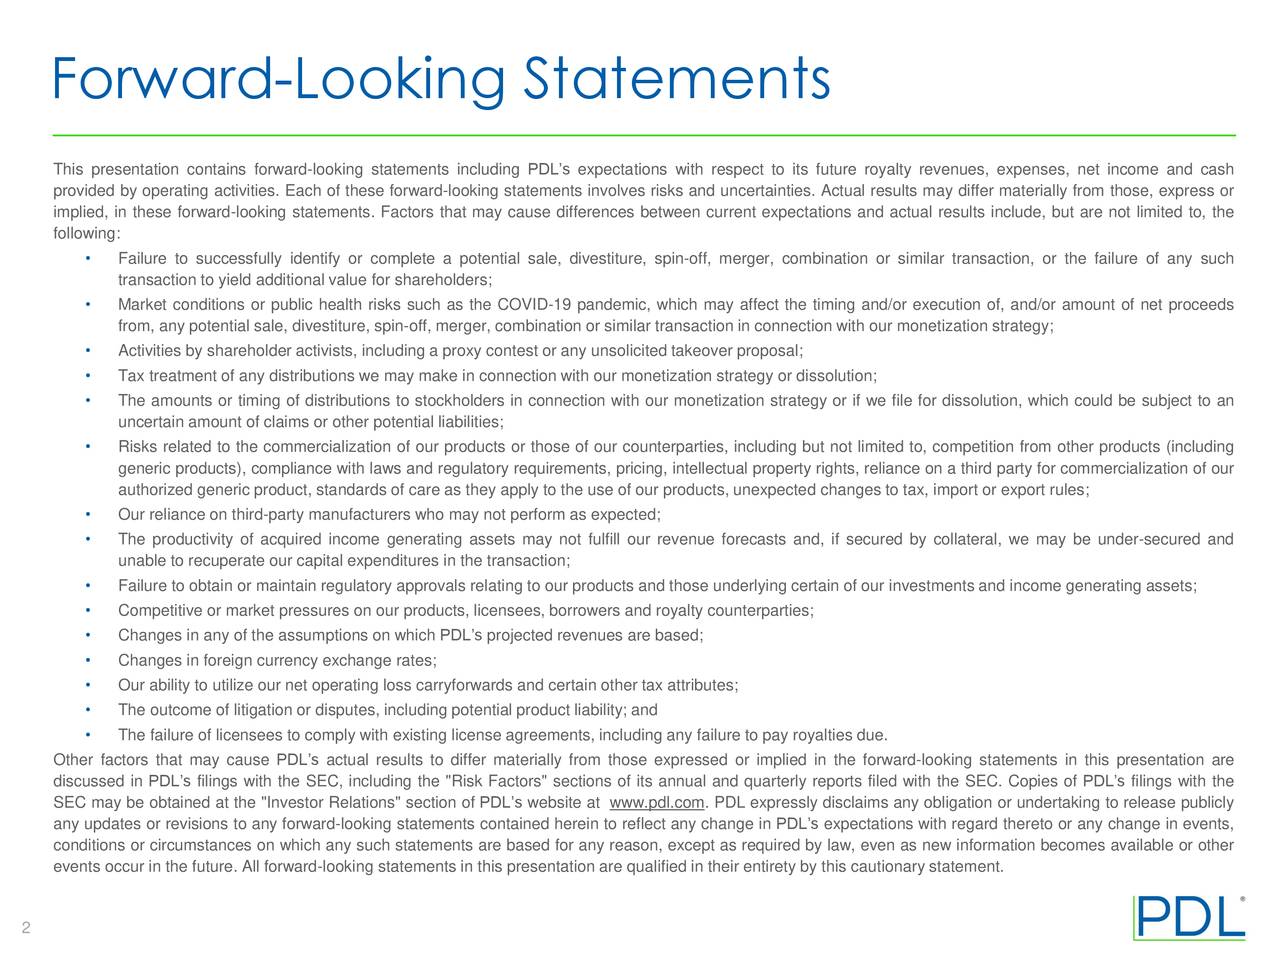 Forward-Looking Statements